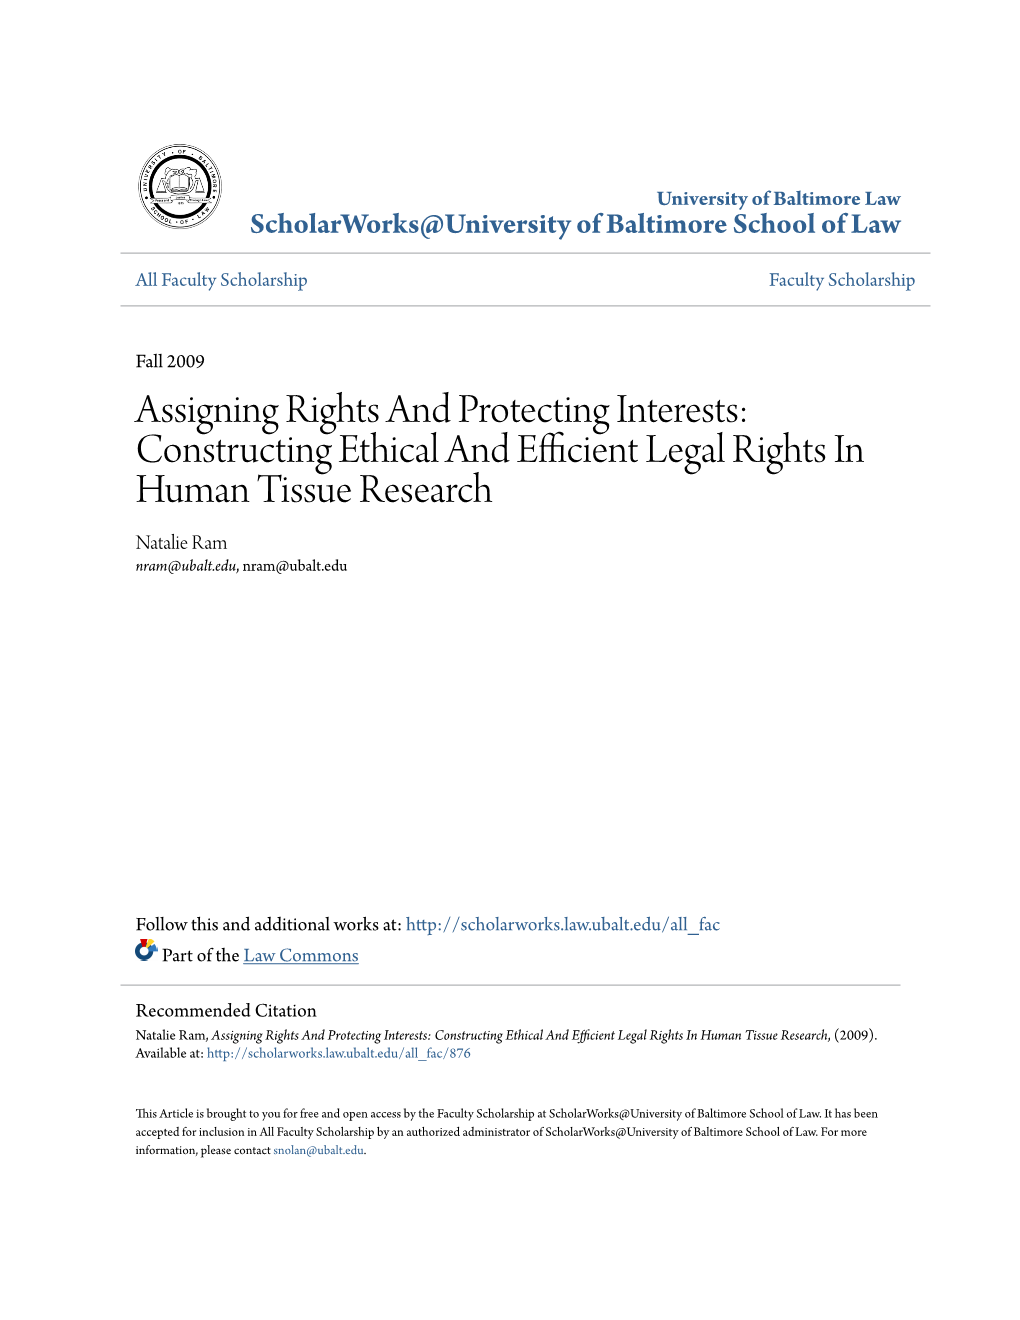 Constructing Ethical and Efficient Legal Rights in Human Tissue Research Natalie Ram Nram@Ubalt.Edu, Nram@Ubalt.Edu